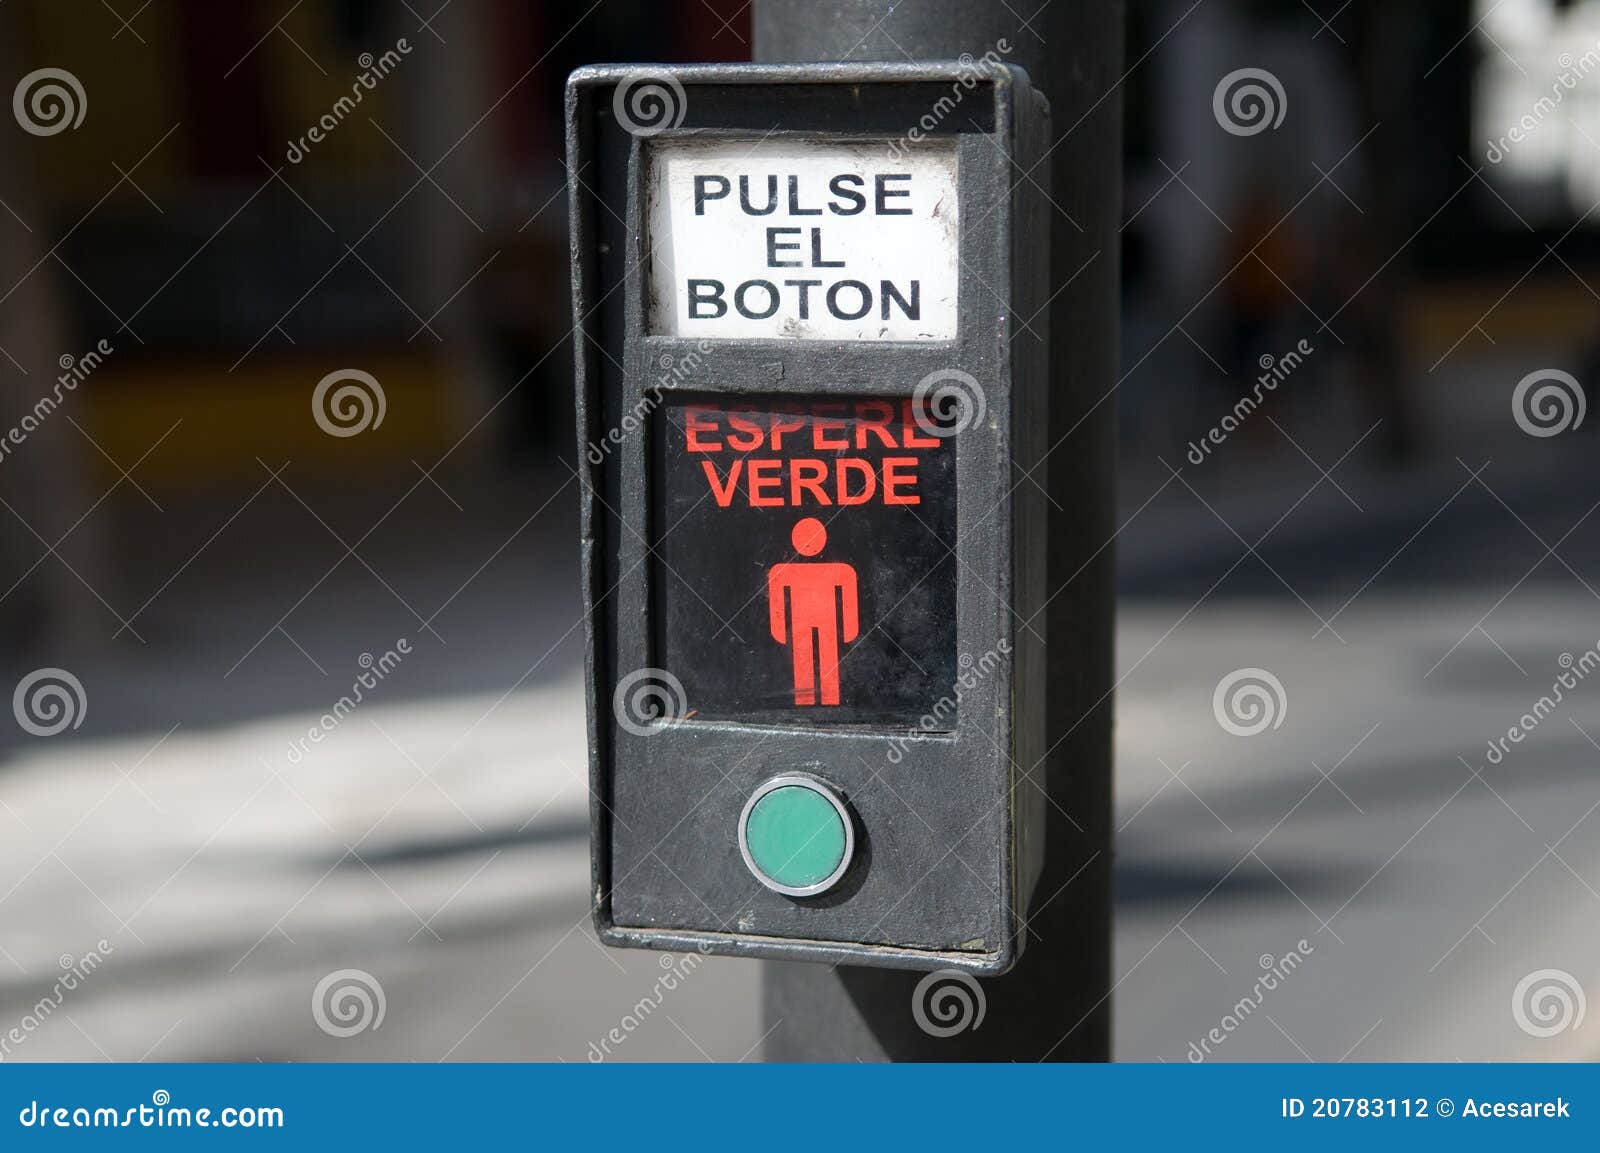 spanish crosswalk button